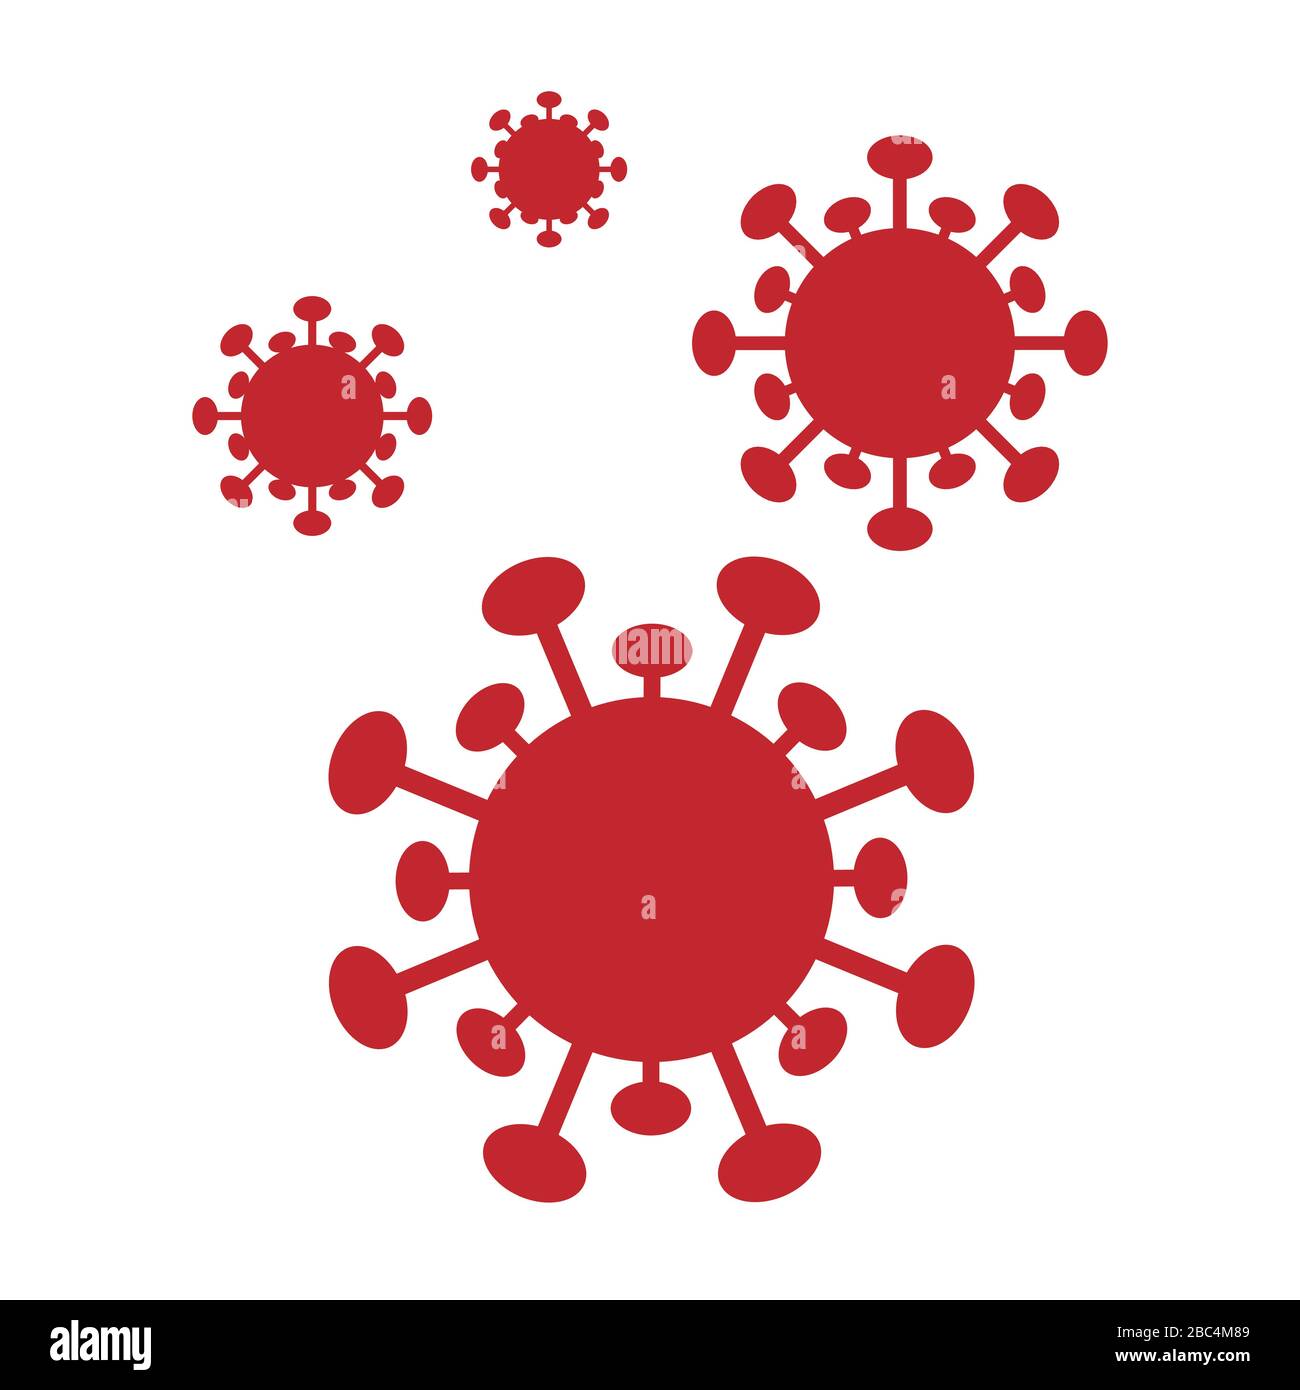 abstract attack of Red Coronavirus Stock Vector